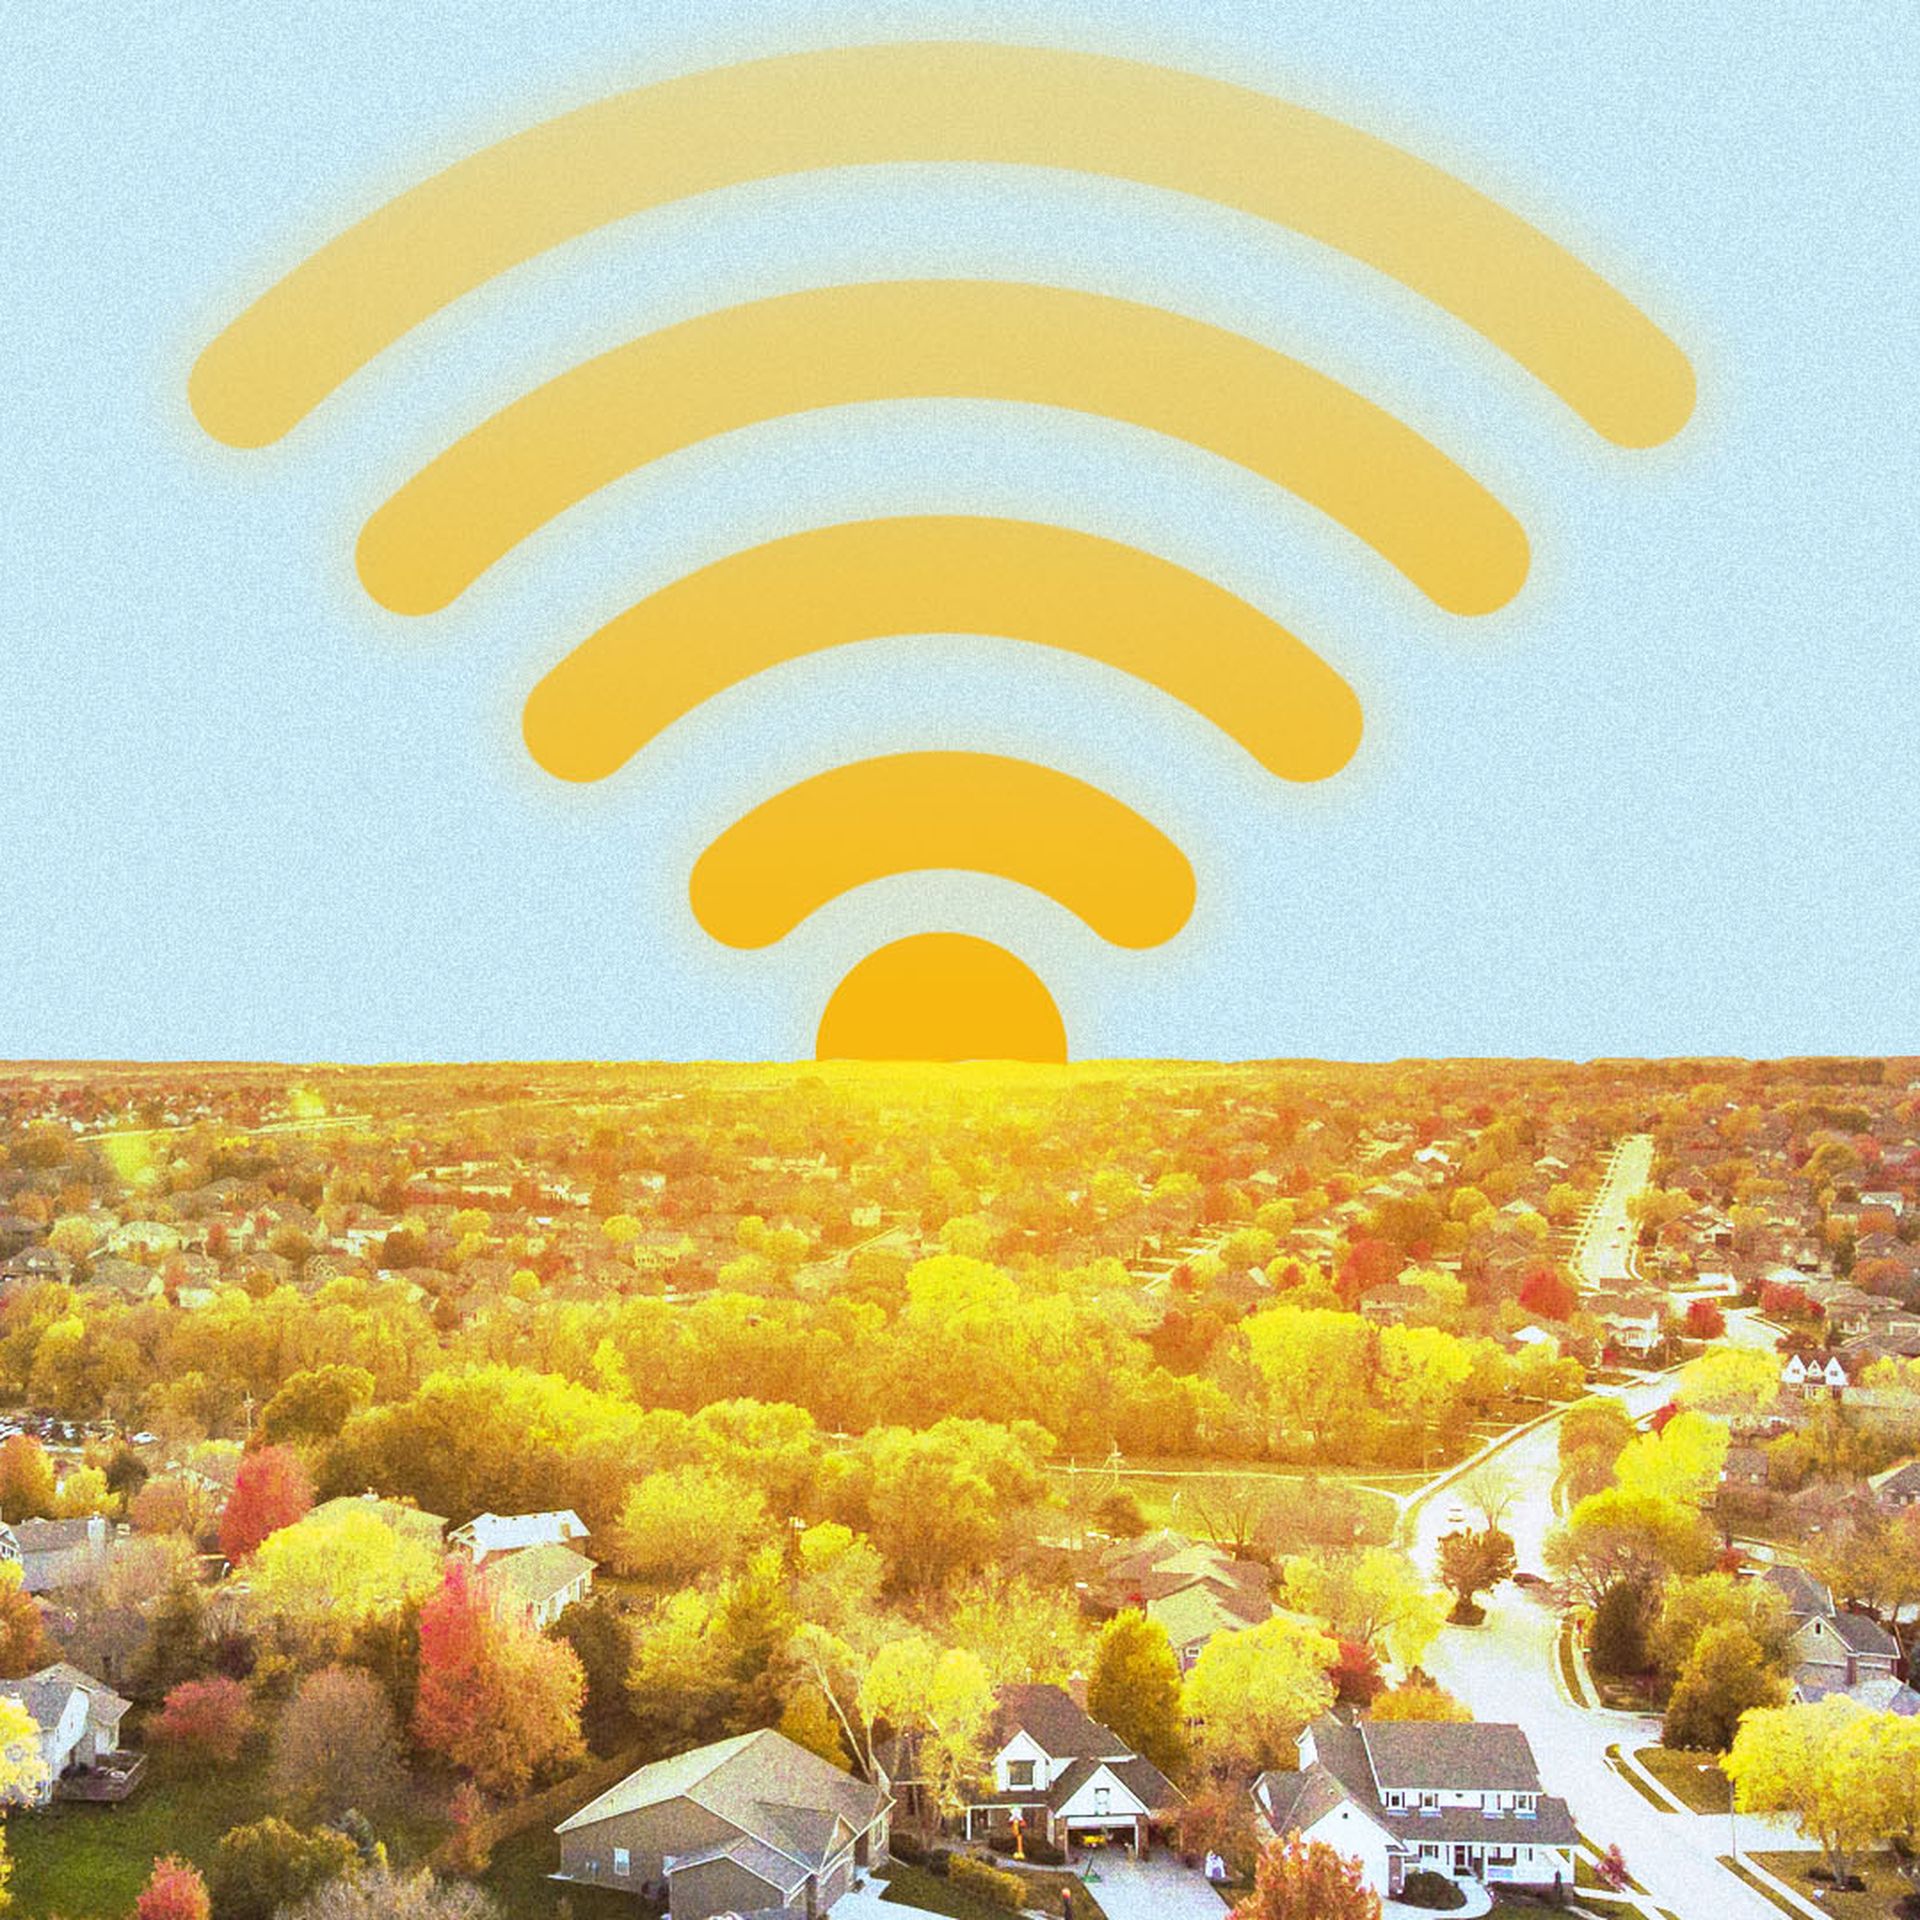 A wireless signal symbol shining over a suburban landscape